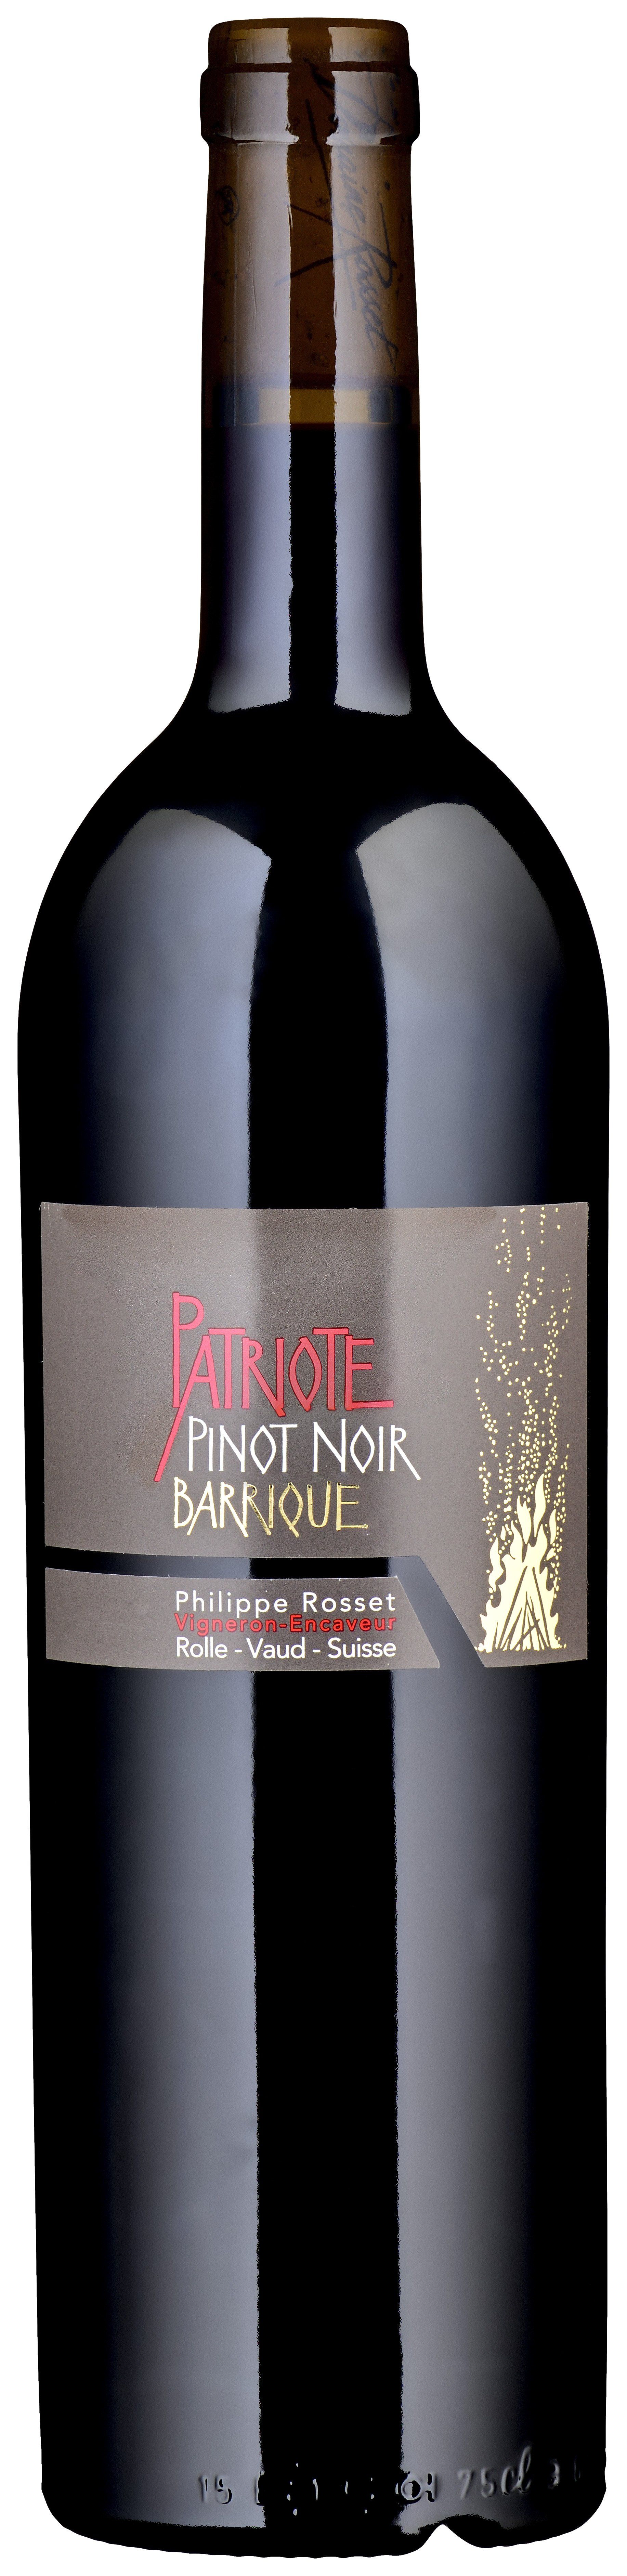 Patriote Pinot Noir vin Domaine Rosset